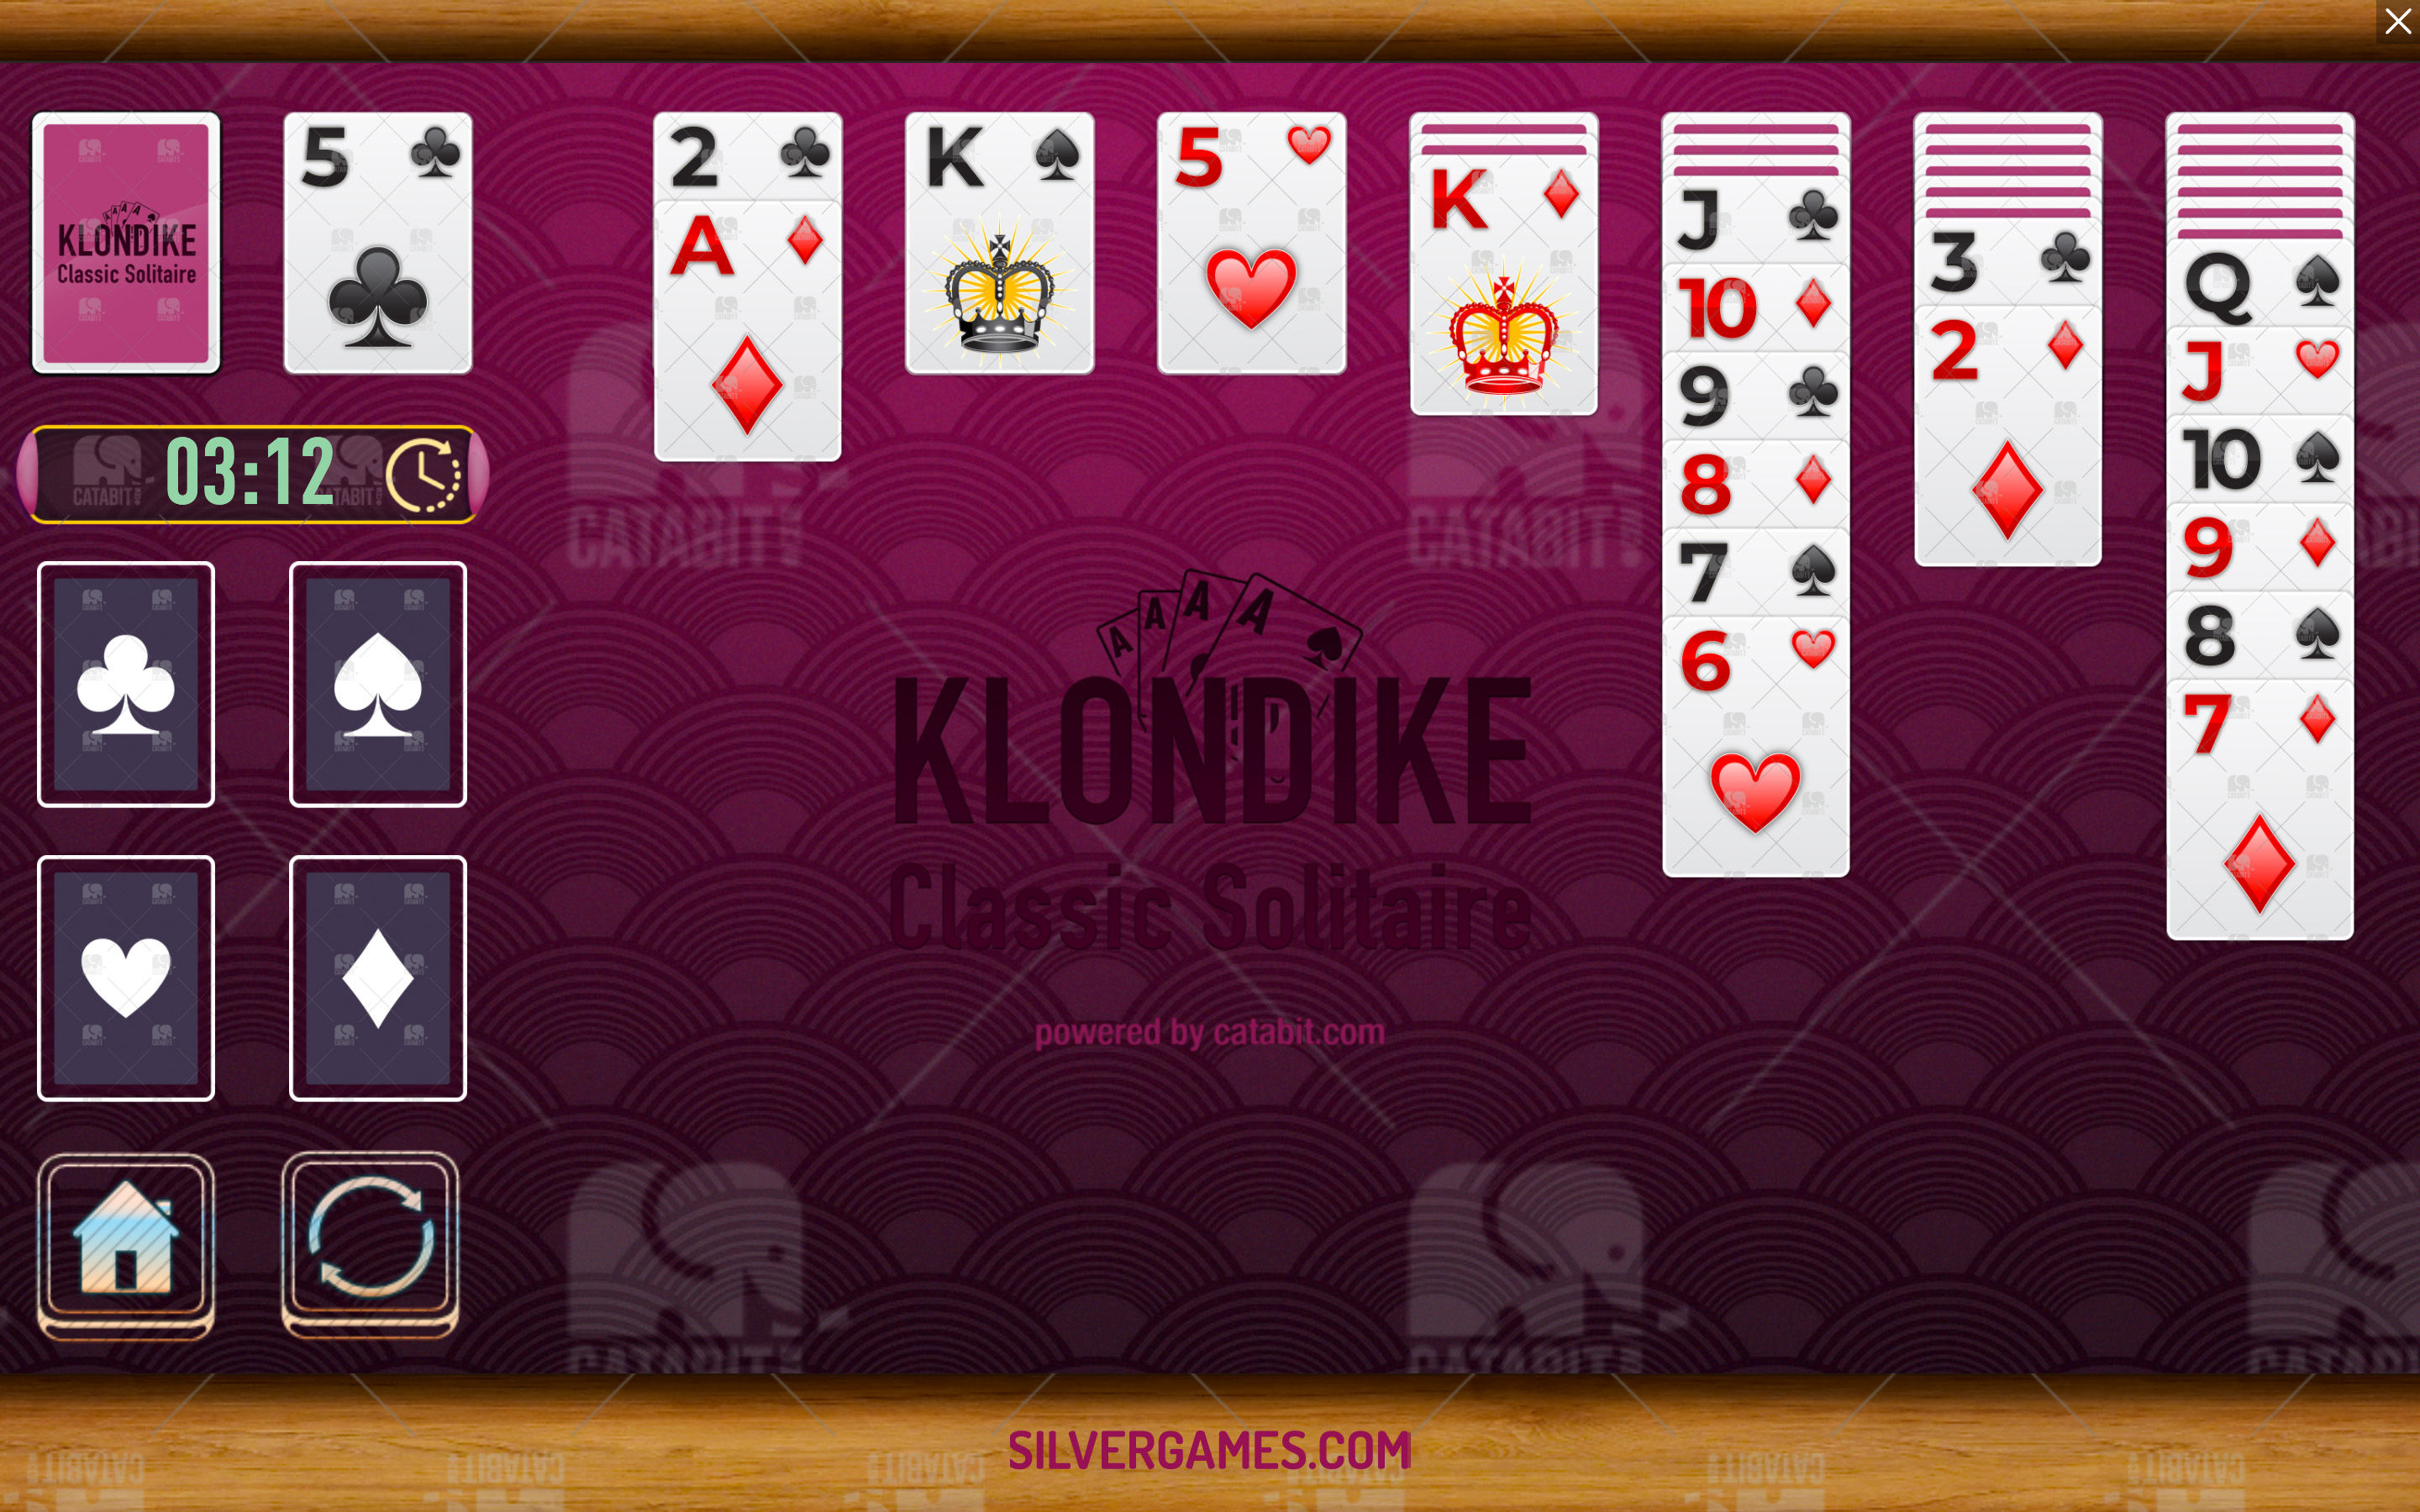 klondike solitaire turn one game